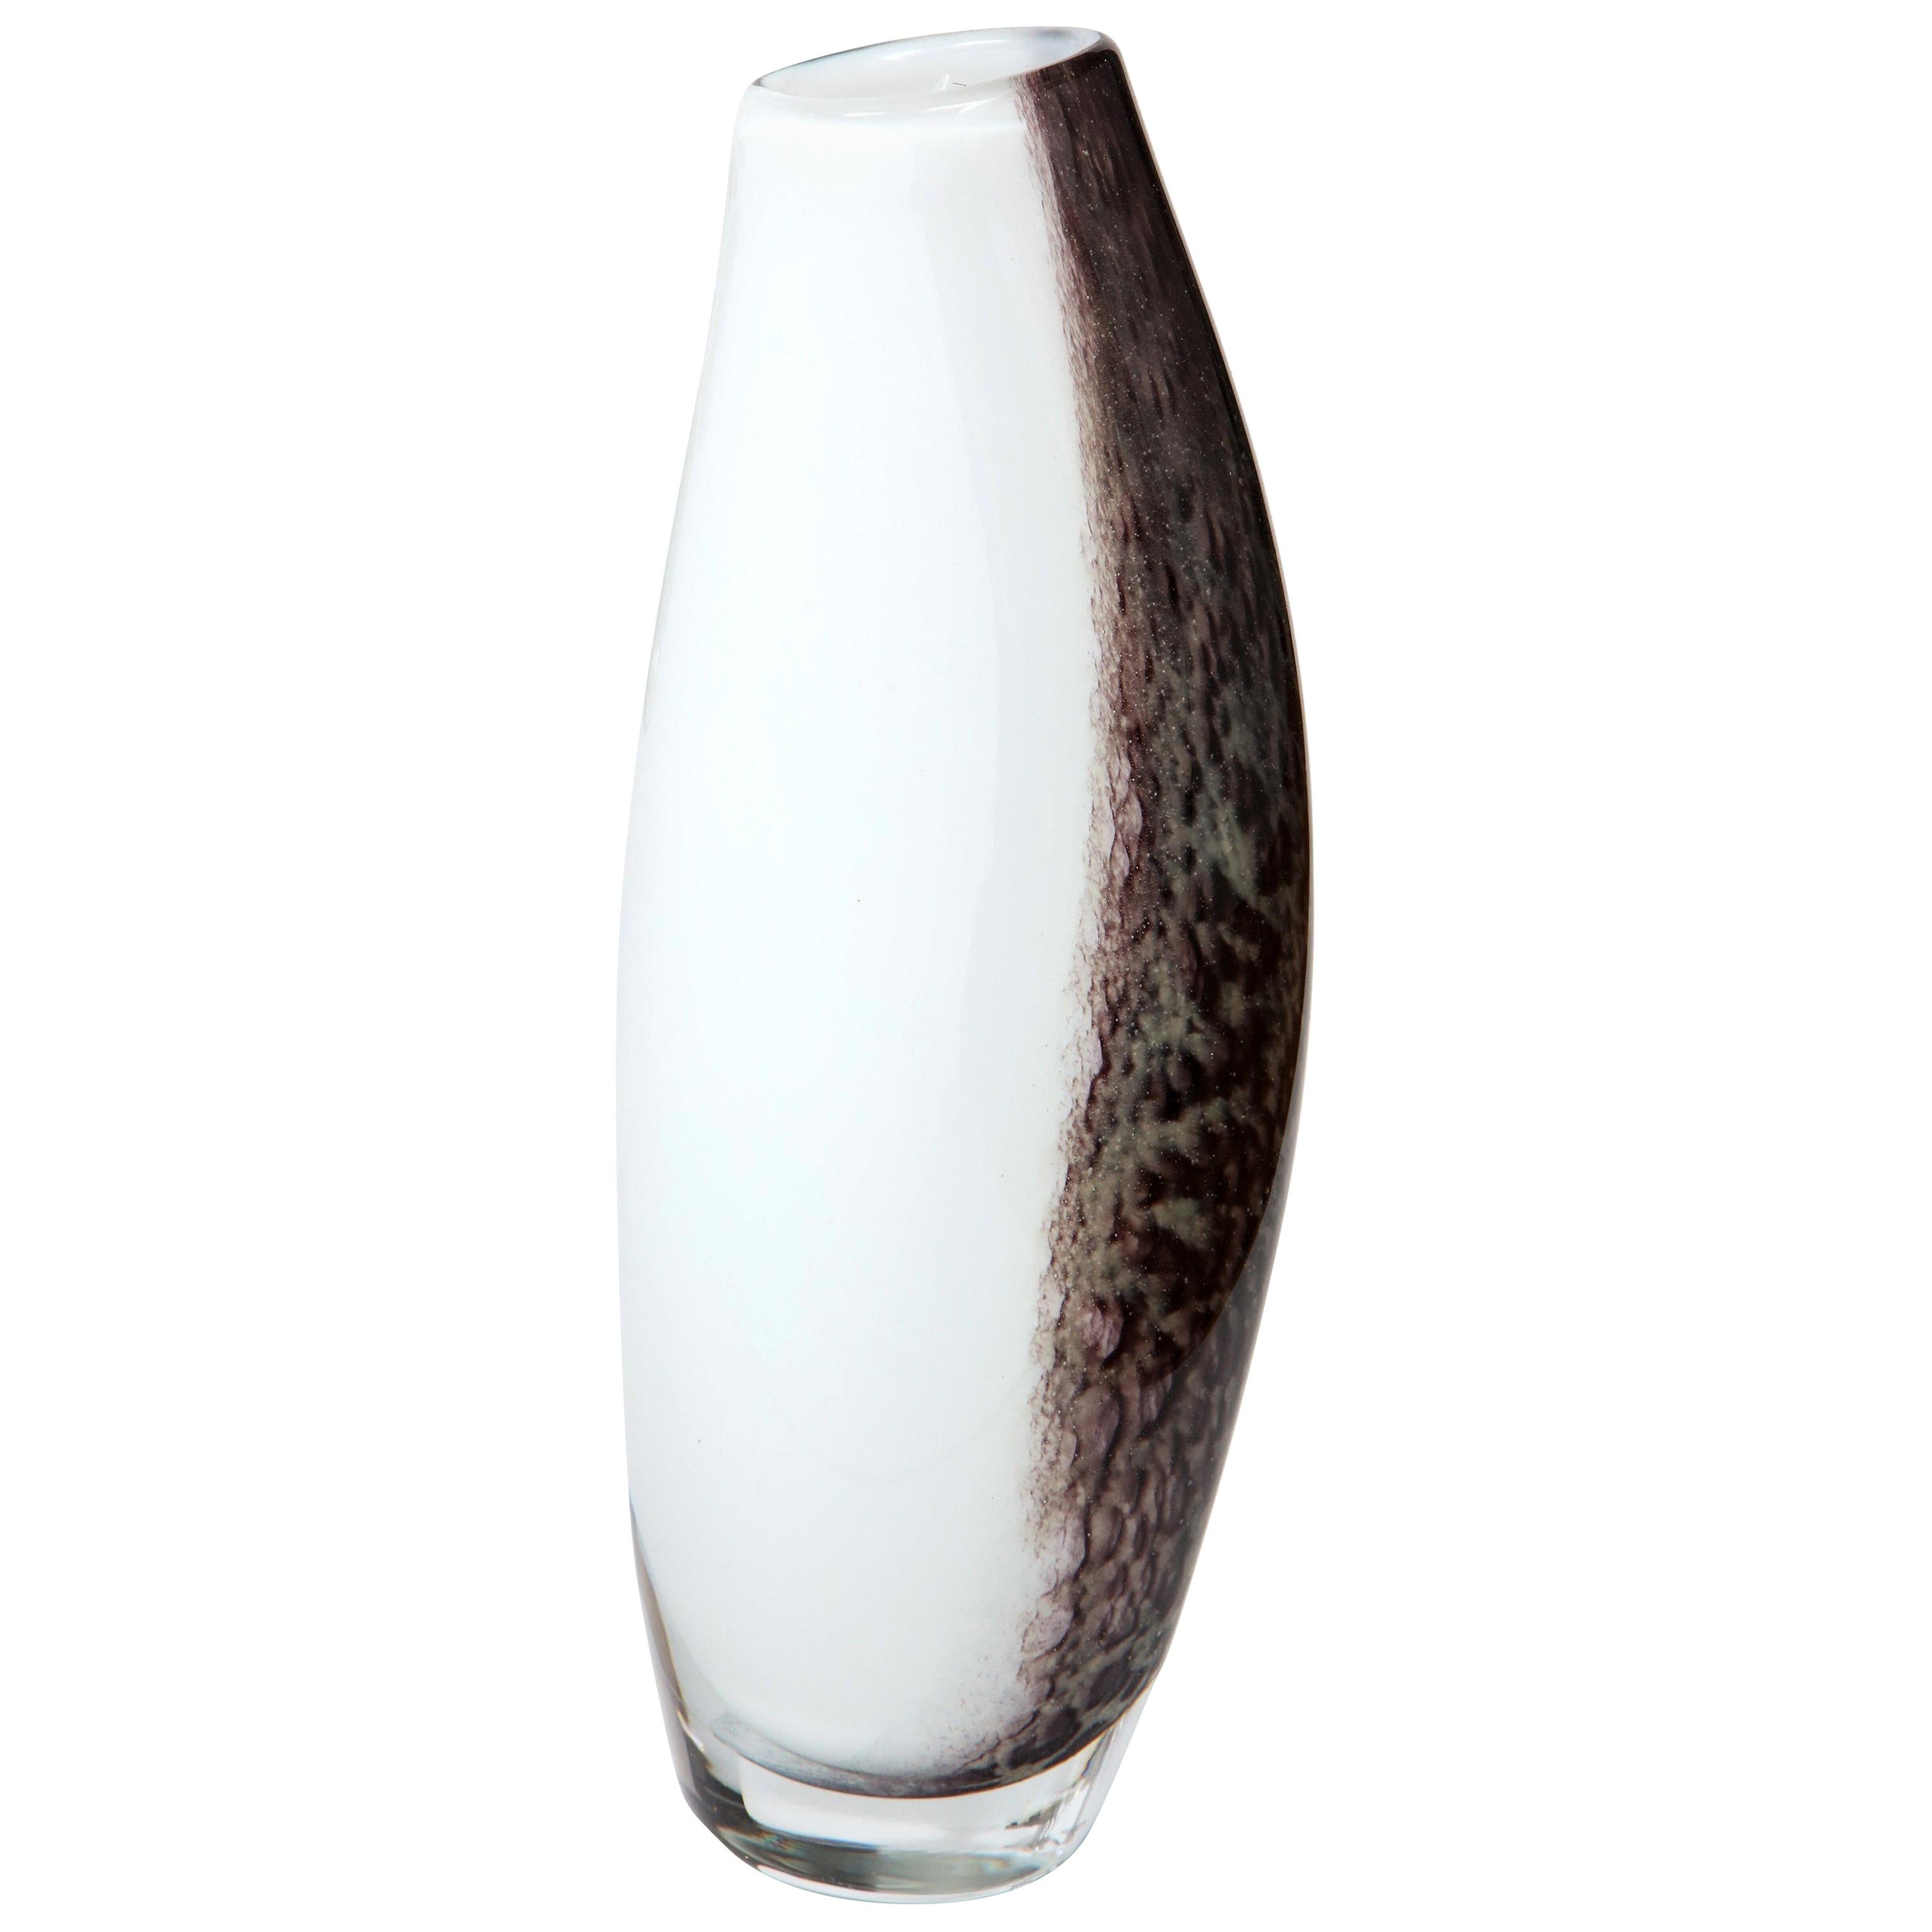 Vase, Midcentury Glass Vase, Scandinavian, White and Chocolate, circa 1950